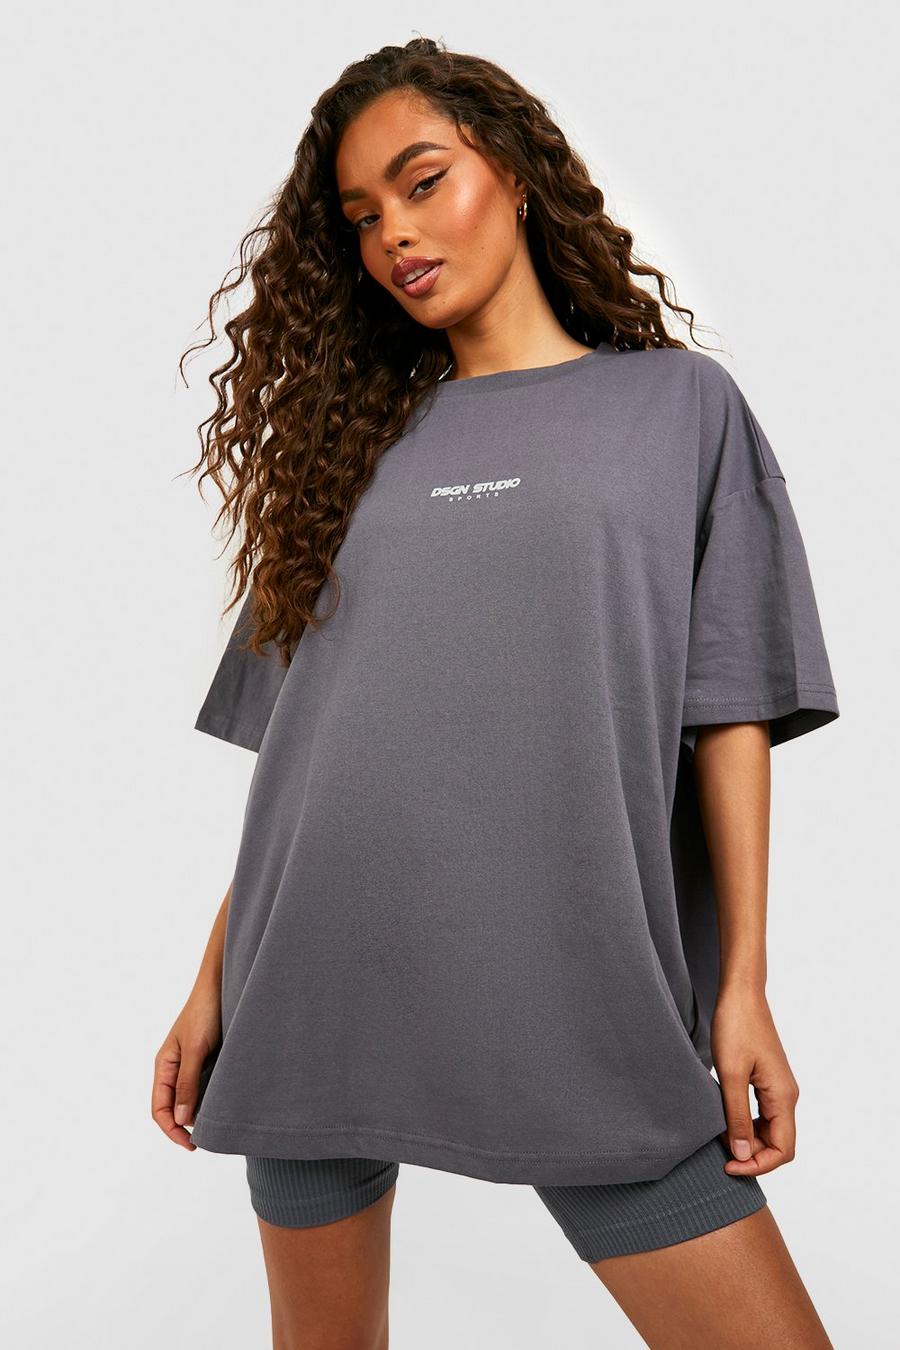 Camiseta oversize con eslogan deportivo Dsgn Studio, Charcoal grigio